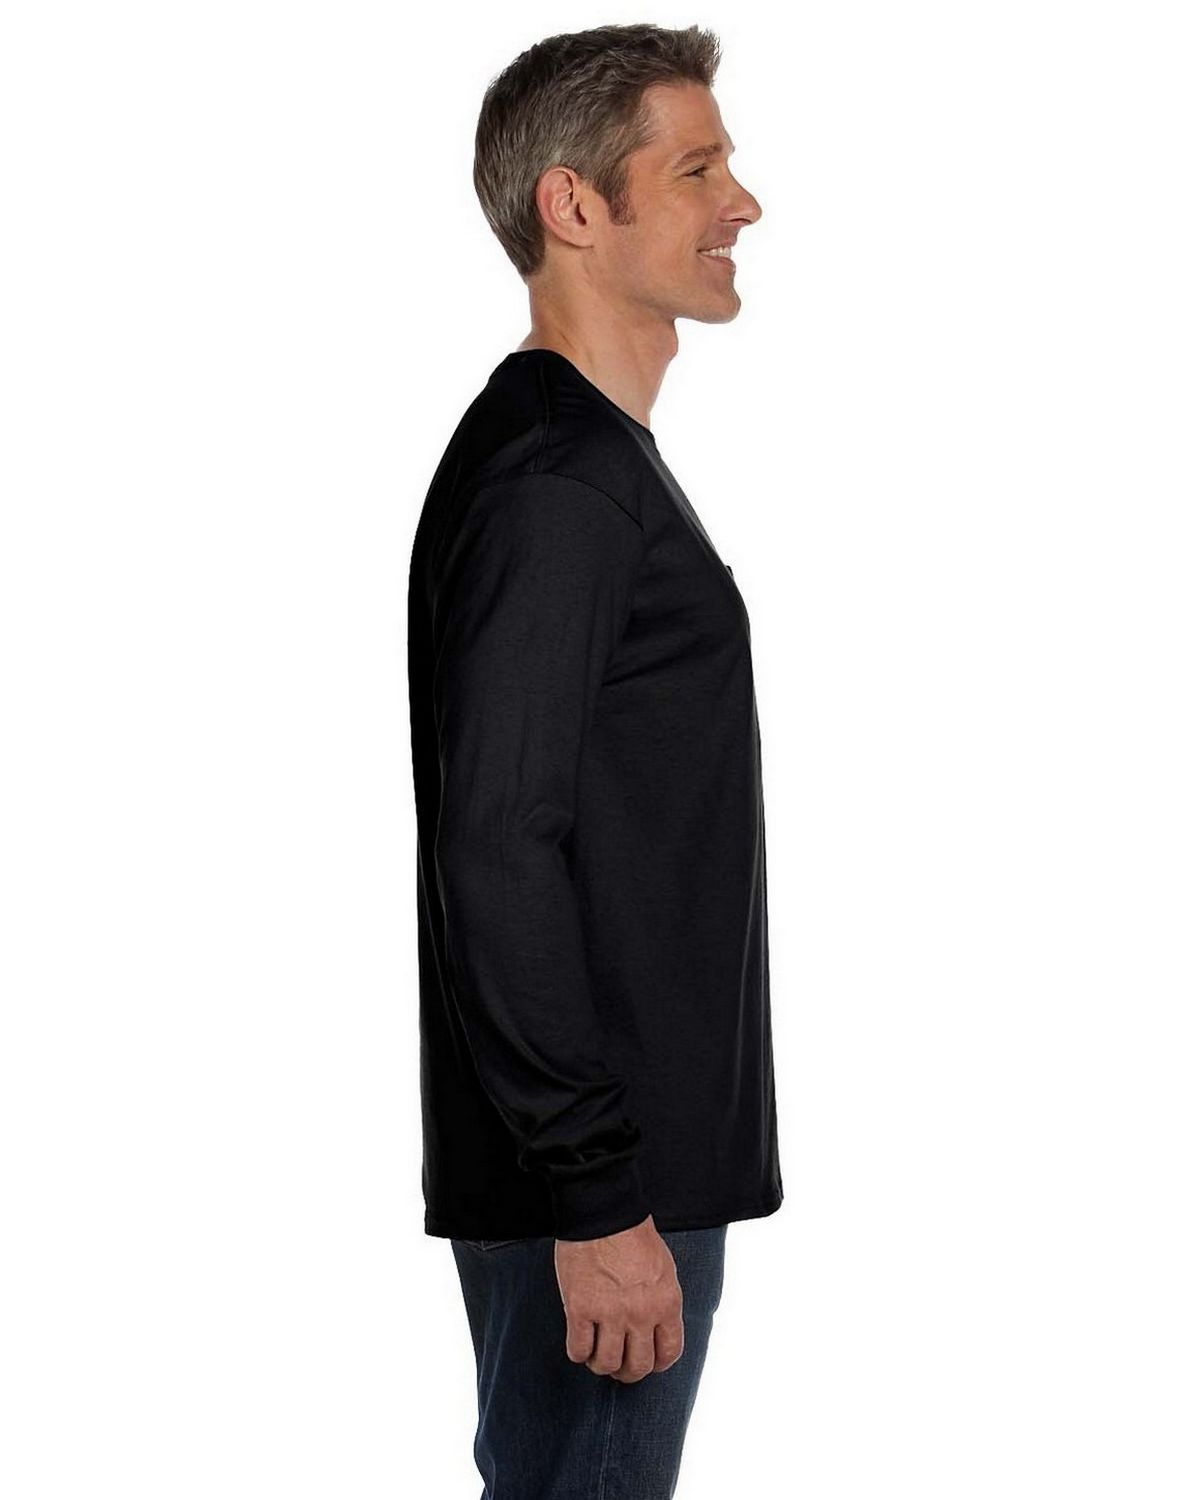 Hanes 5596 Men's Tagless Long Sleeve Pocket T Shirt